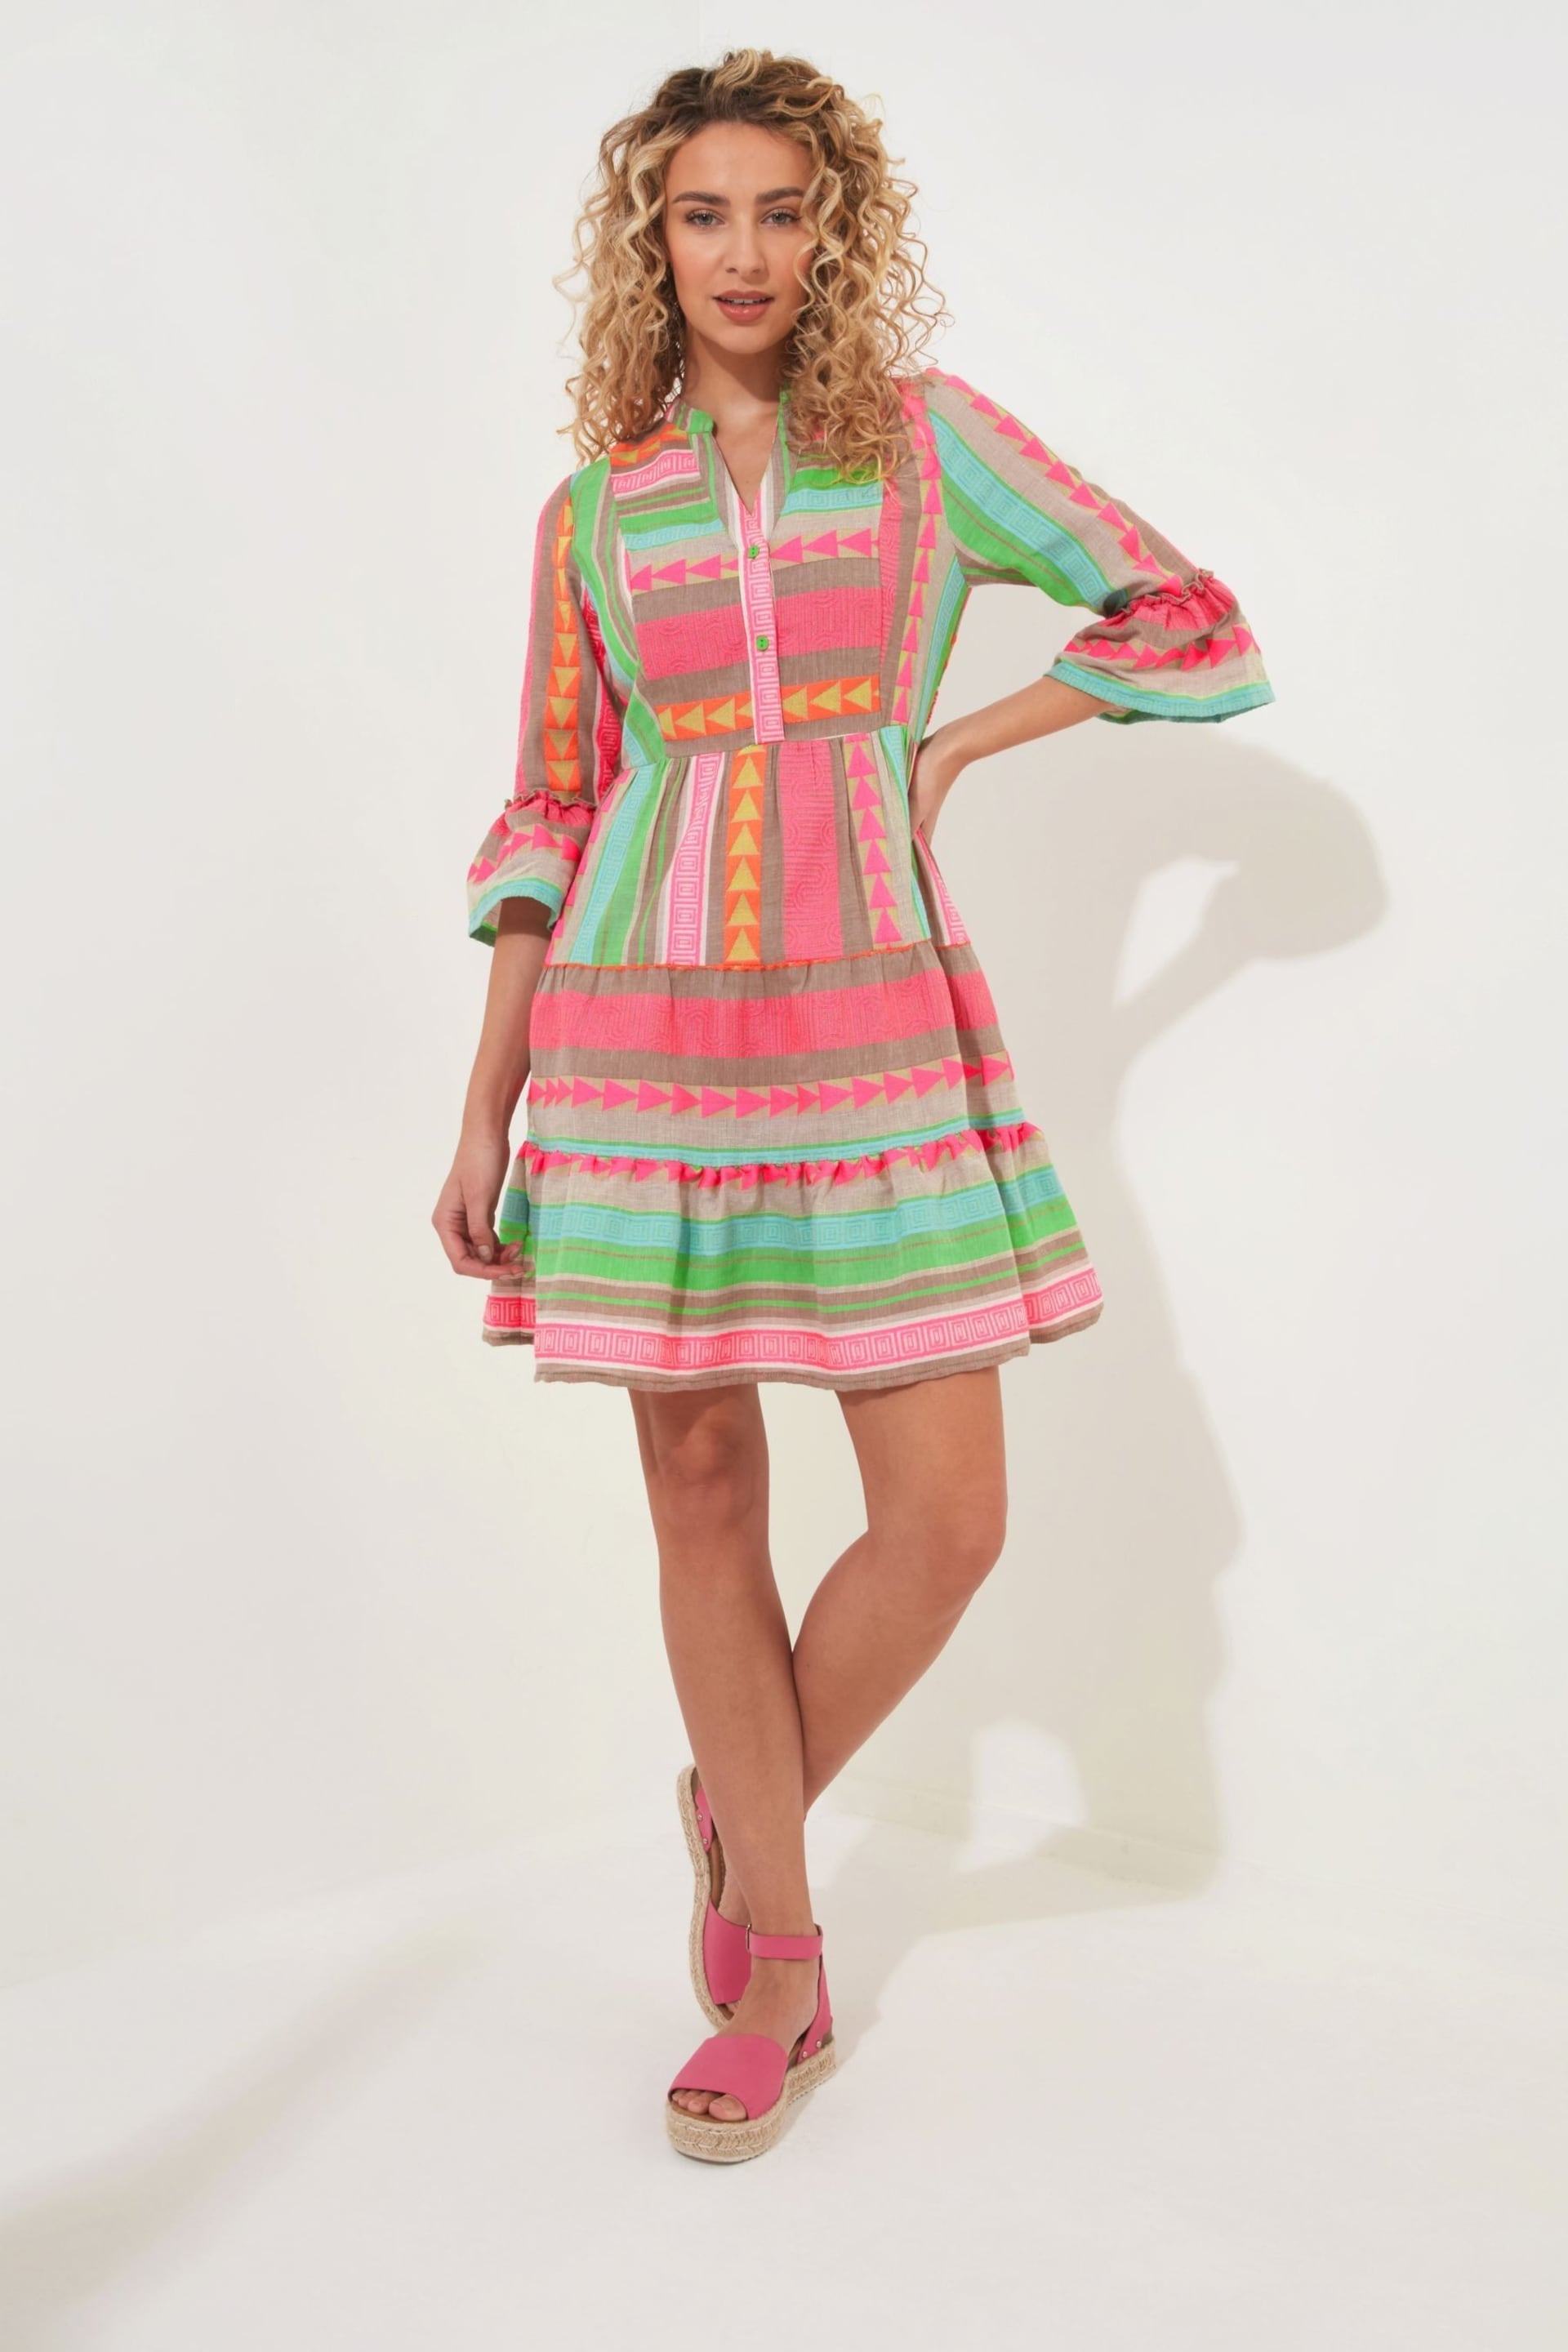 Joe Browns Pink Jacquard Boho Flared Sleeve Smock Style Tunic Mini Dress - Image 2 of 7